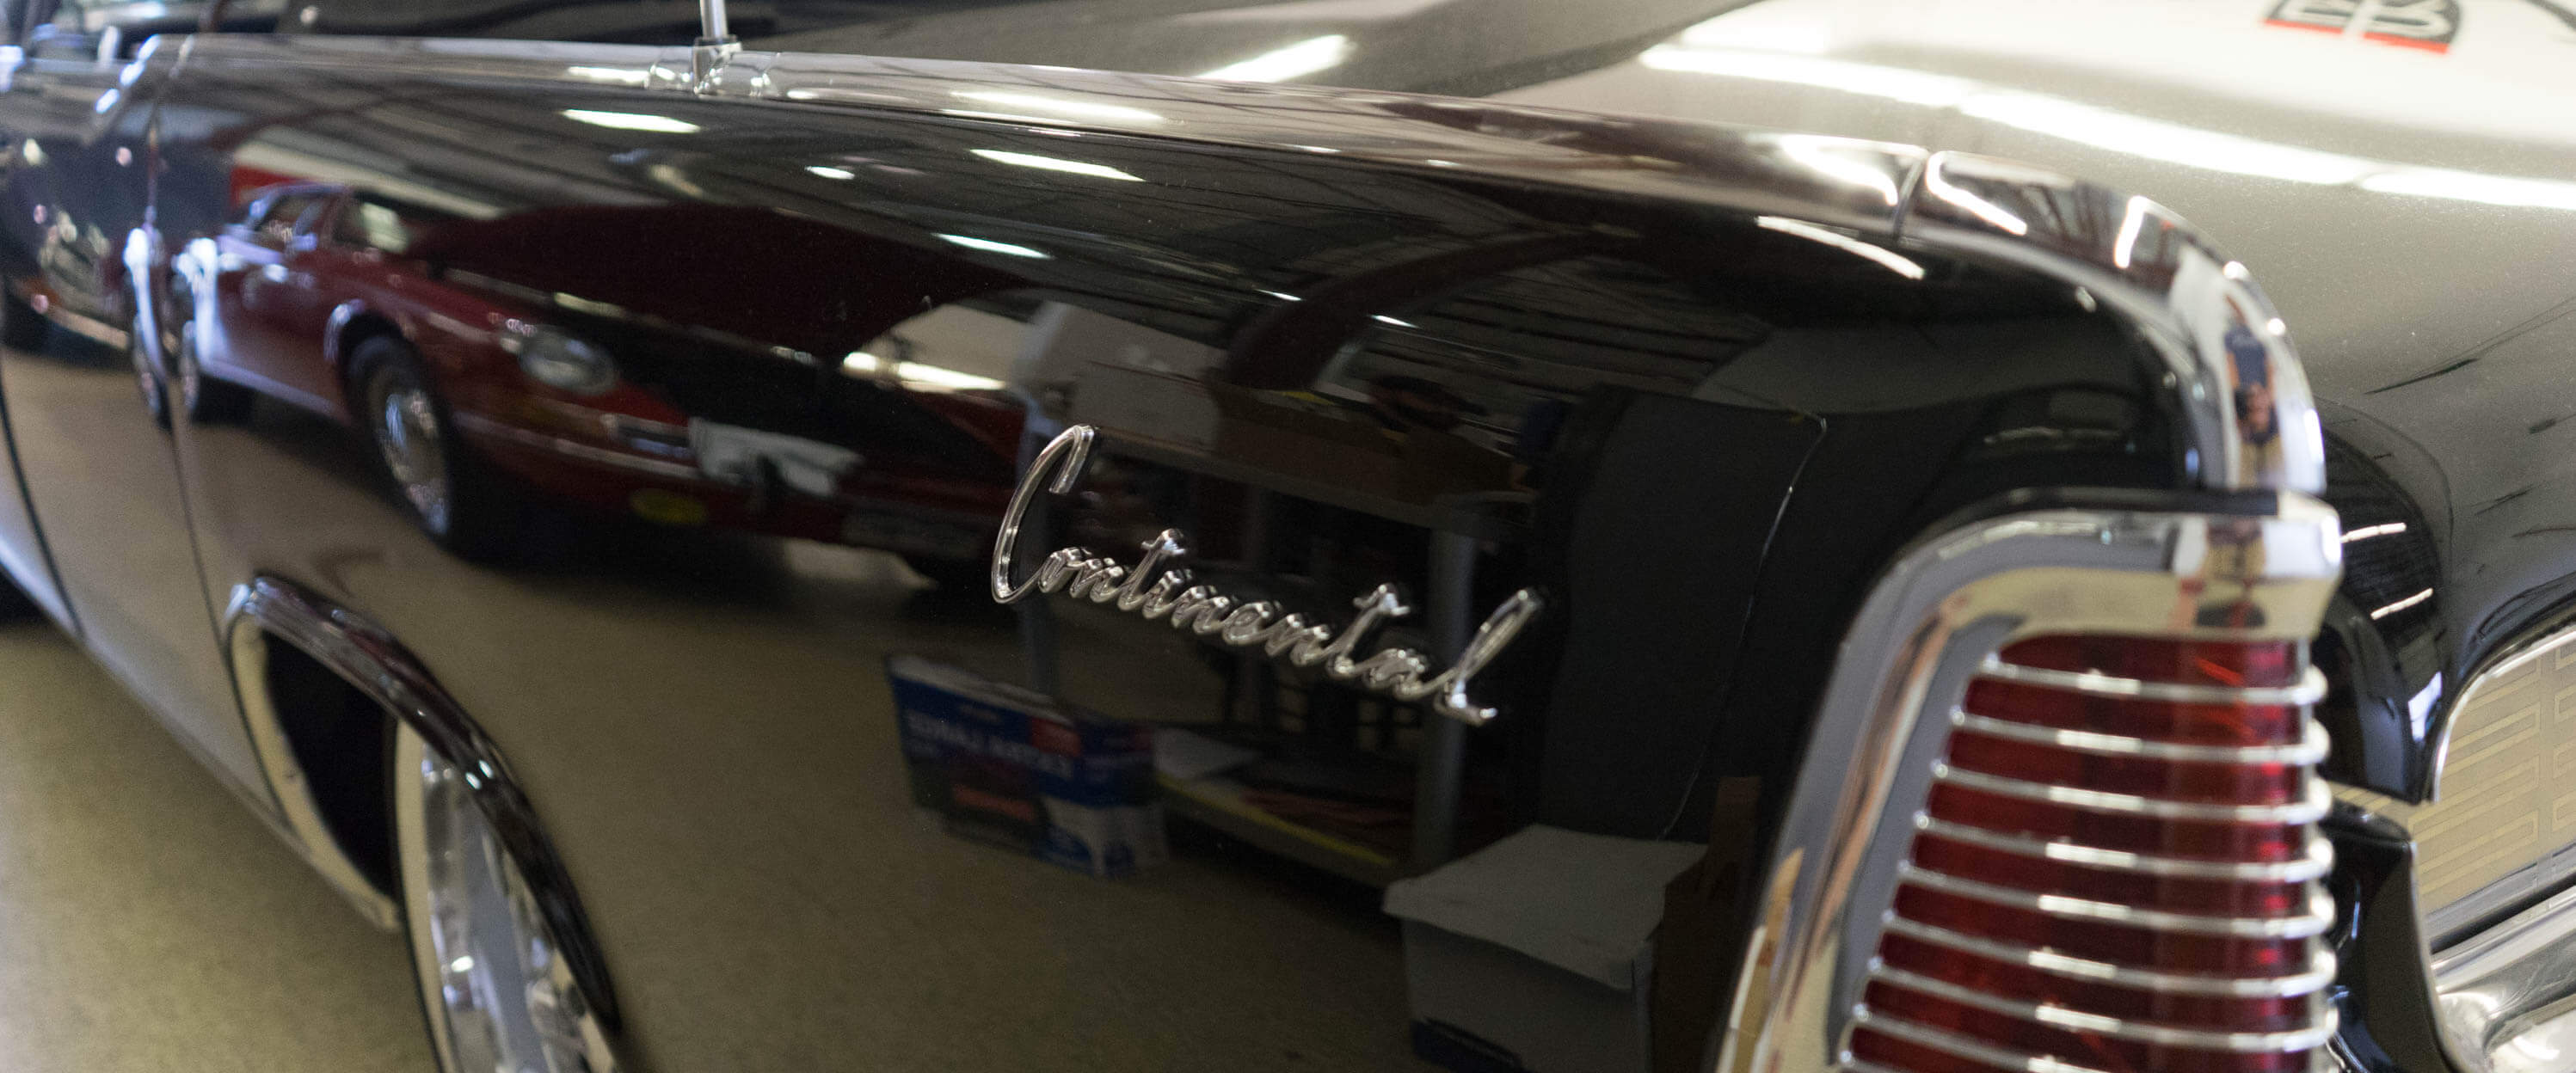 1962-Lincoln-Continental-Black-slideshow-008@2x